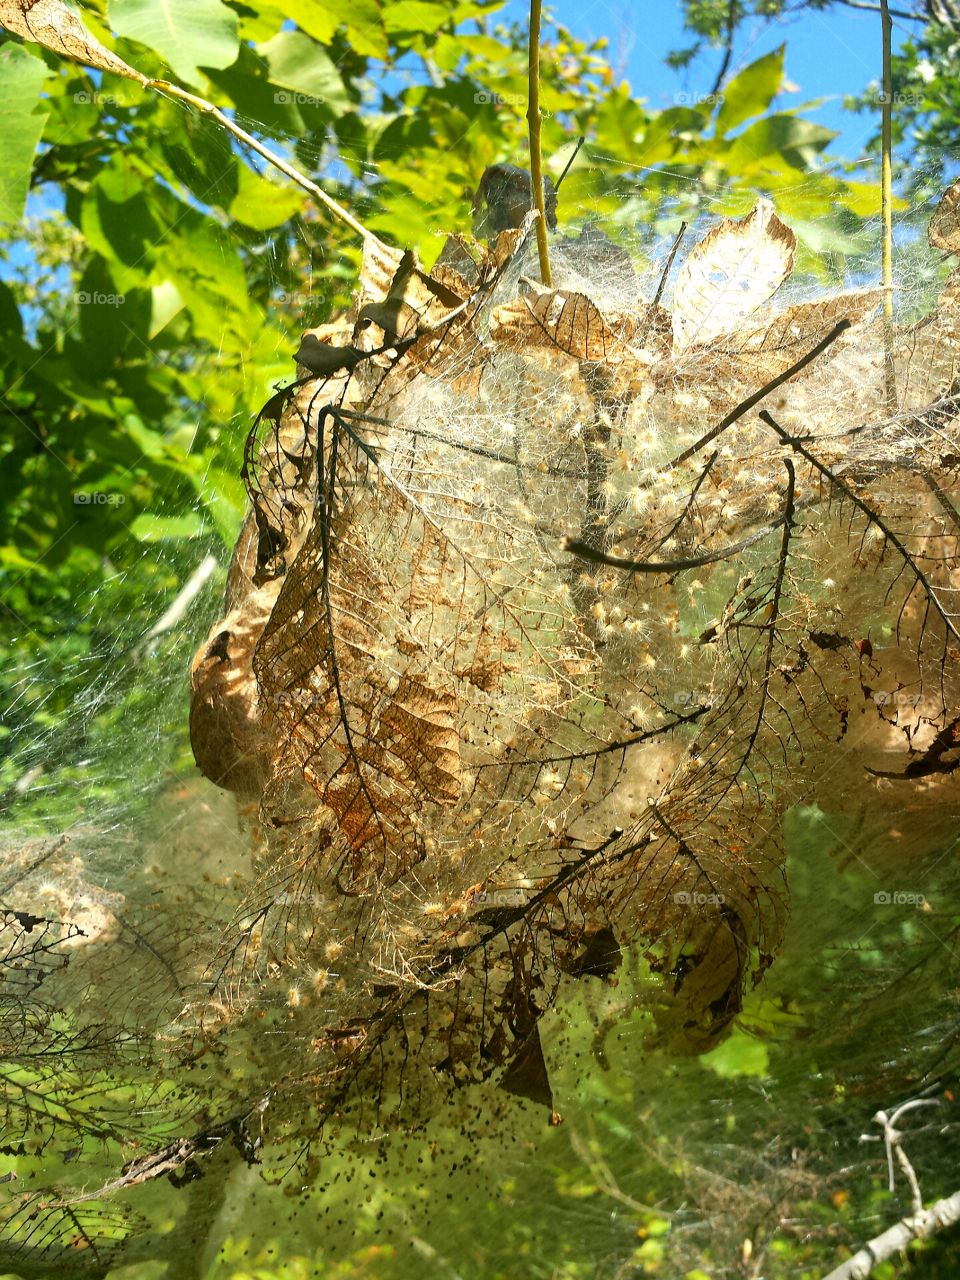 bag worm nest